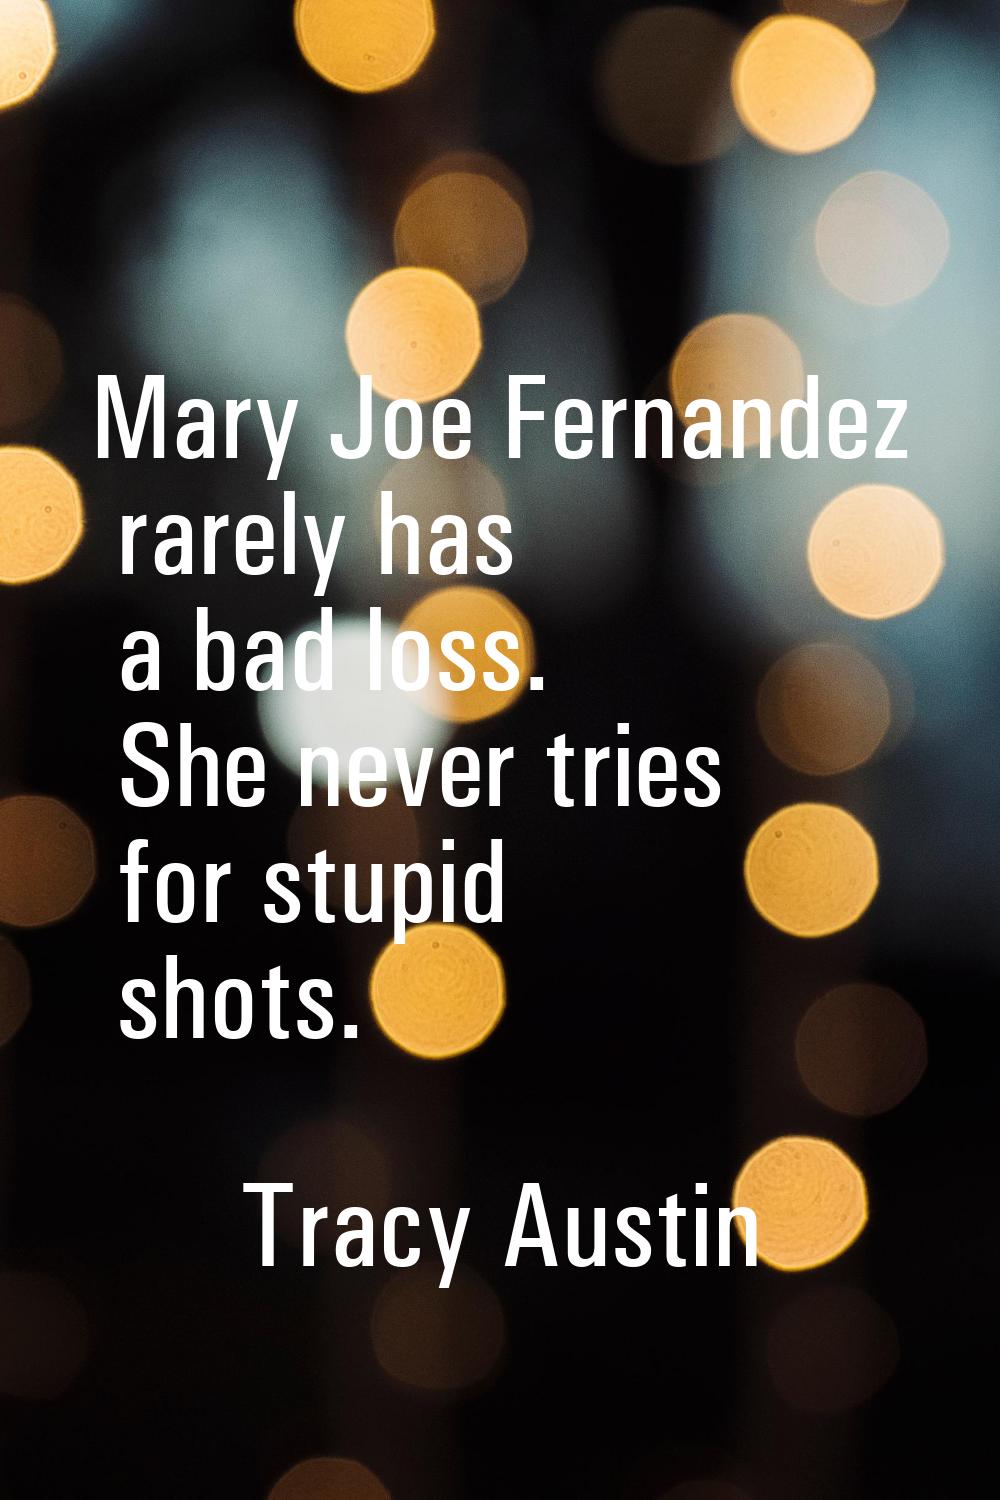 Mary Joe Fernandez rarely has a bad loss. She never tries for stupid shots.